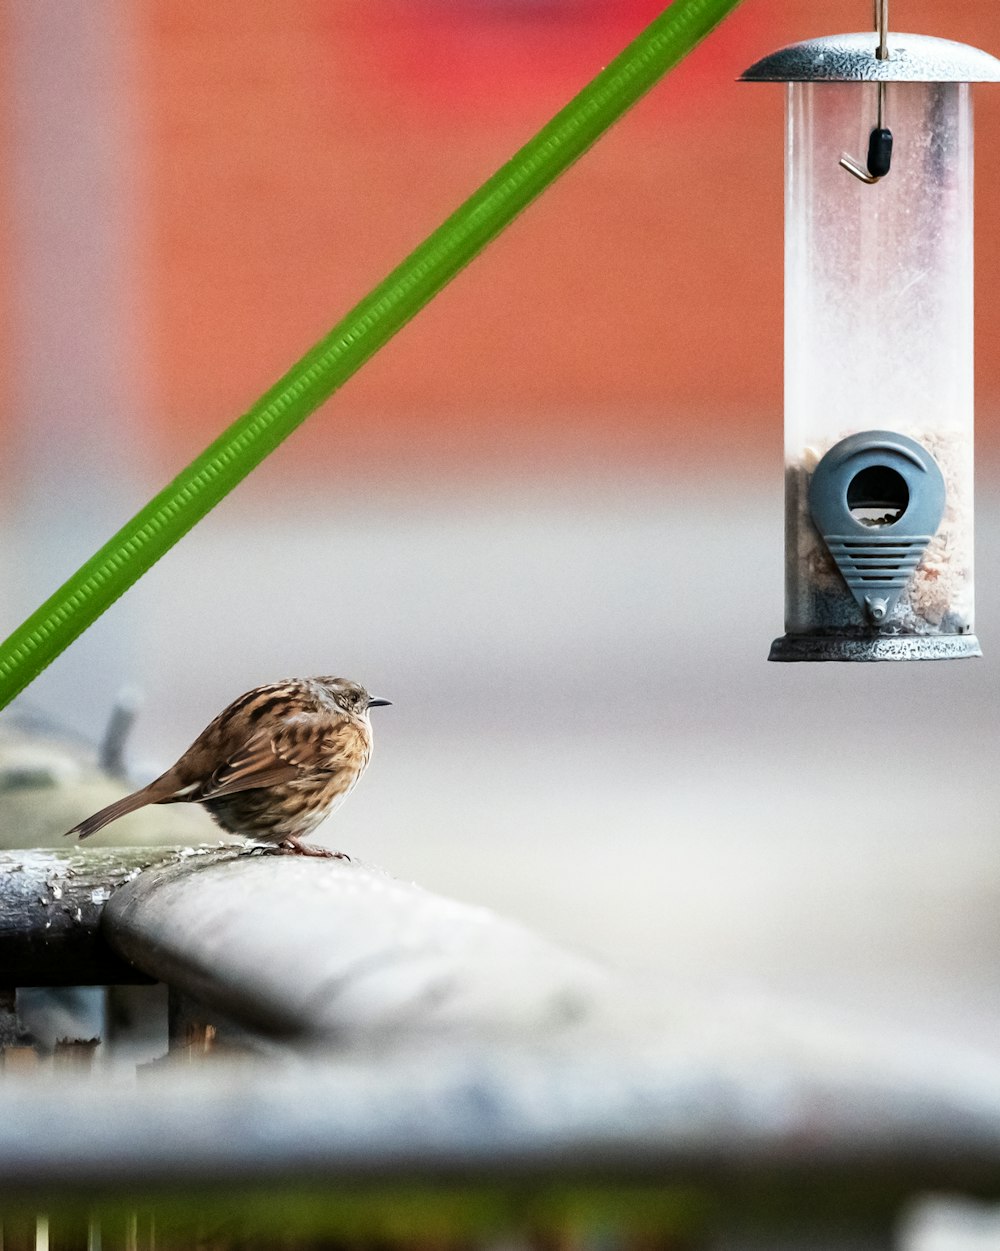 a bird sitting on a ledge next to a bird feeder